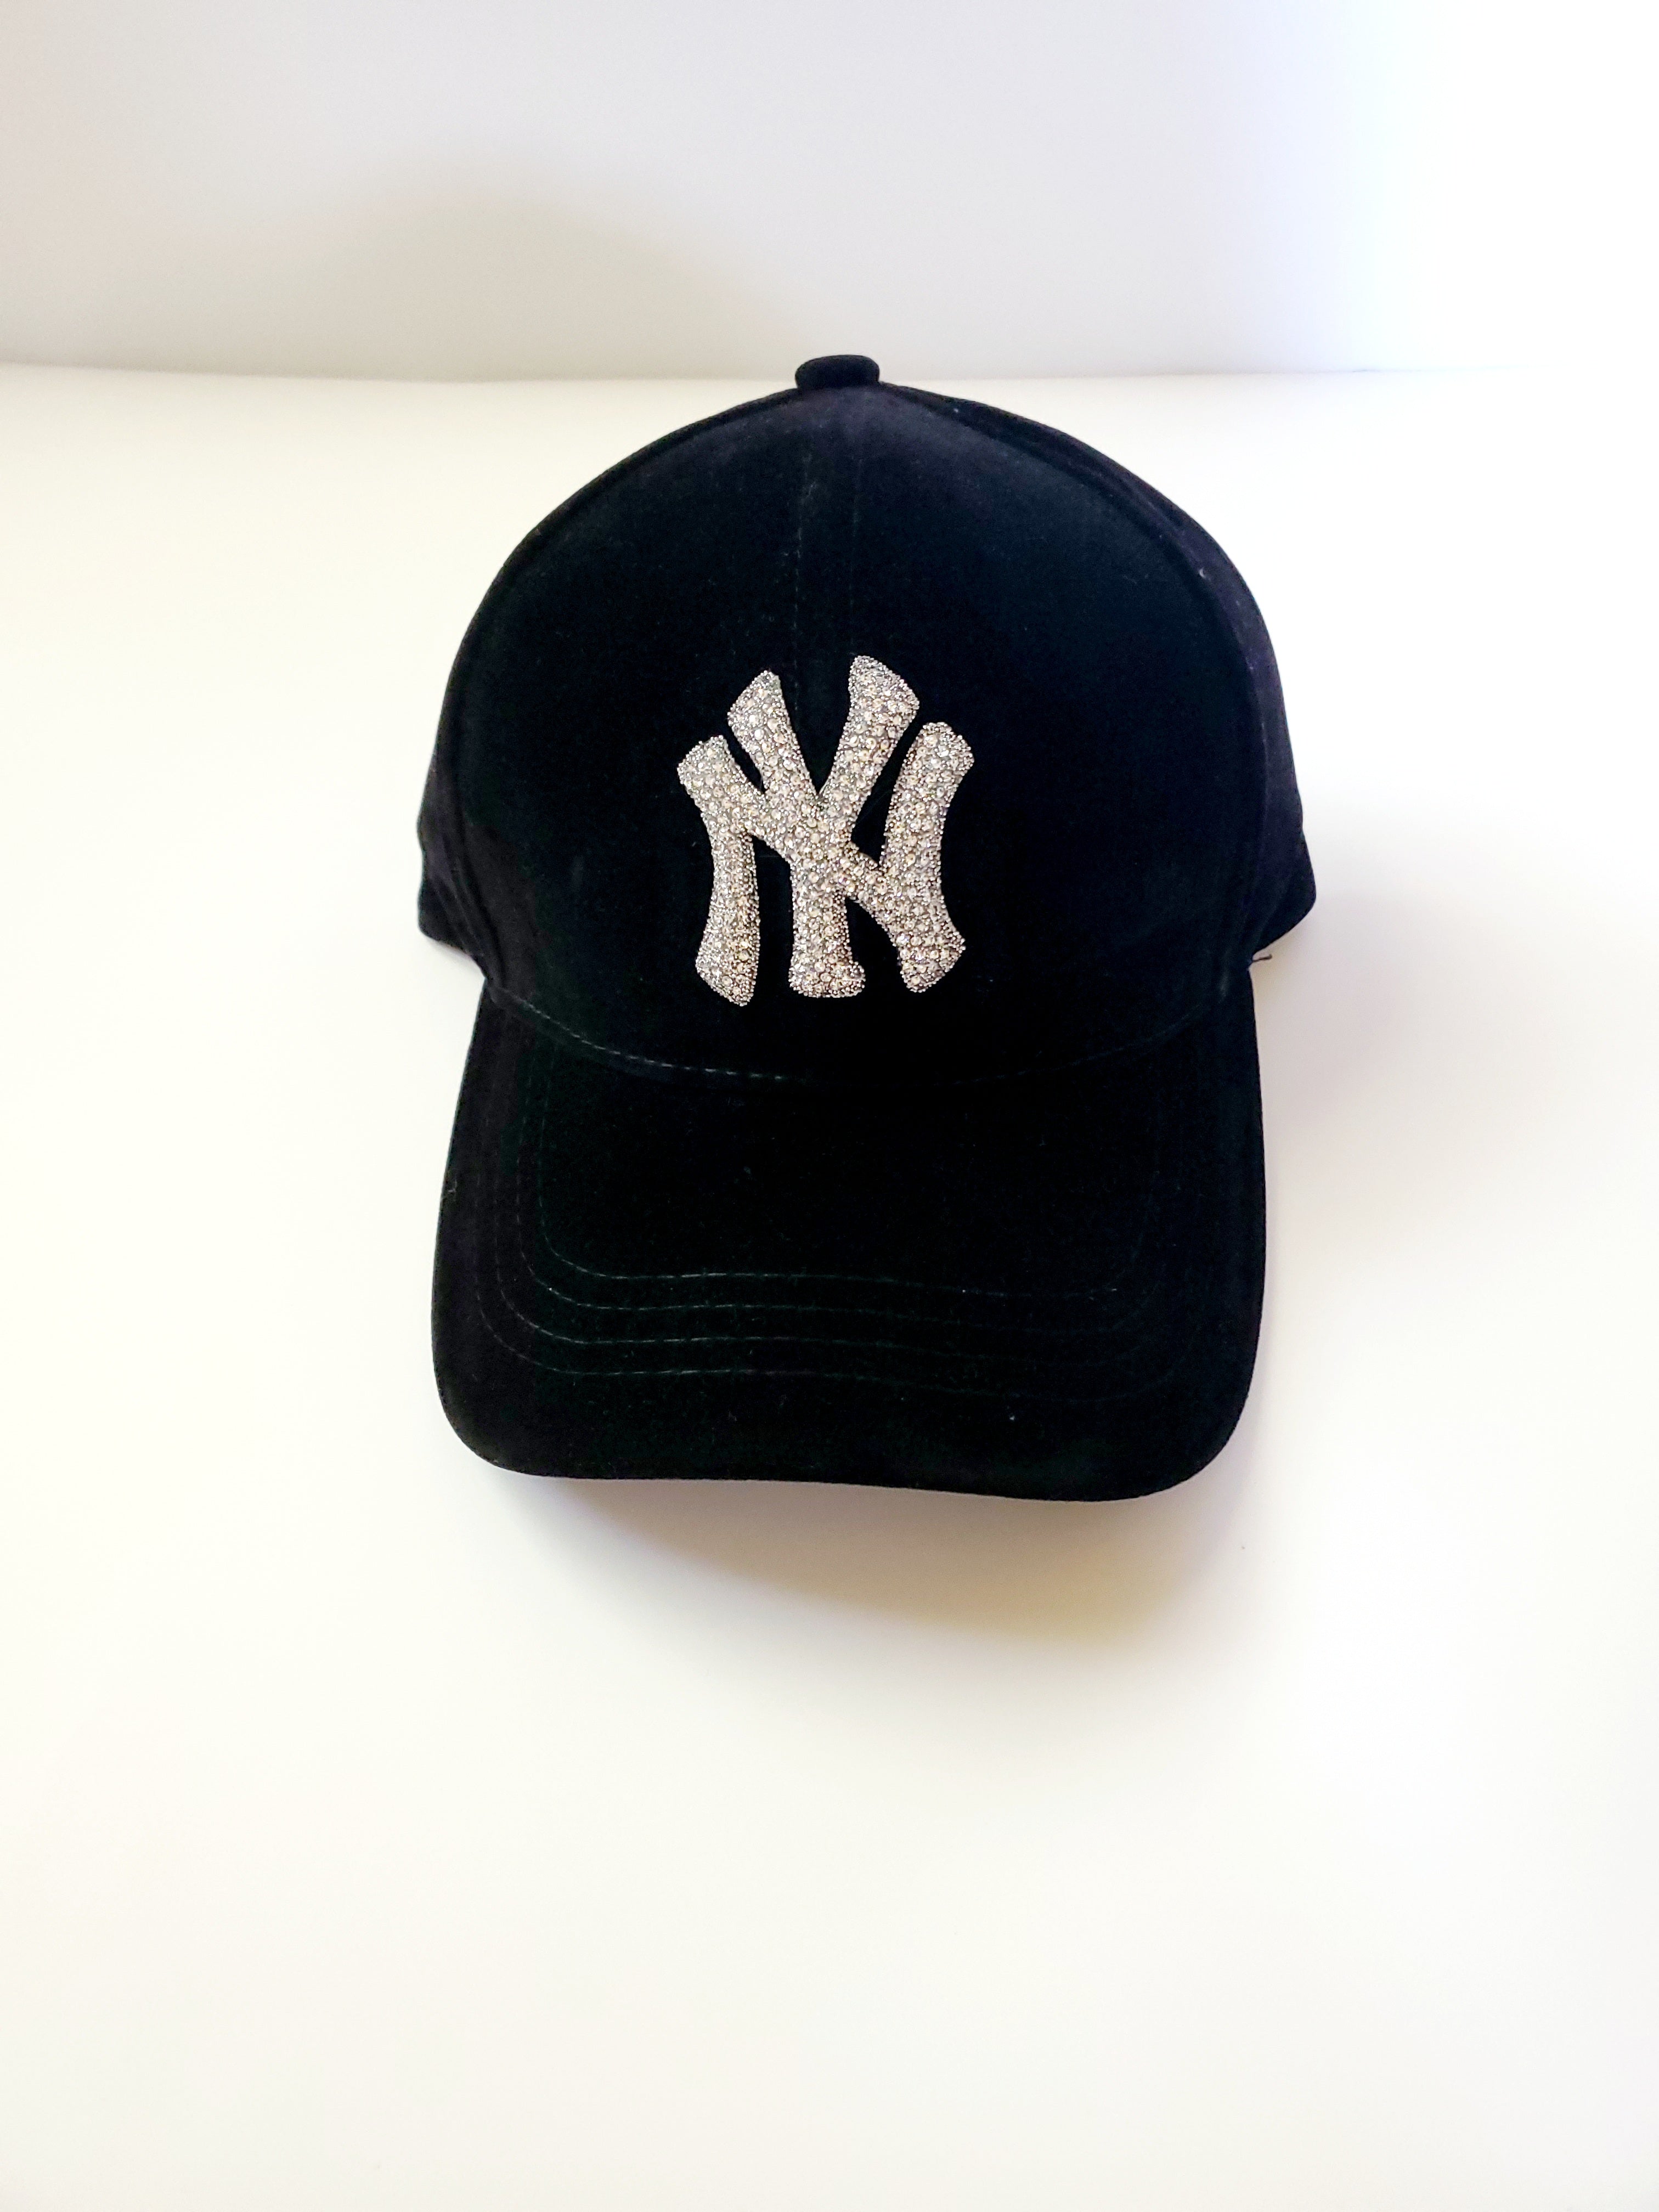 NY Bling Hats  TJLX The Brand